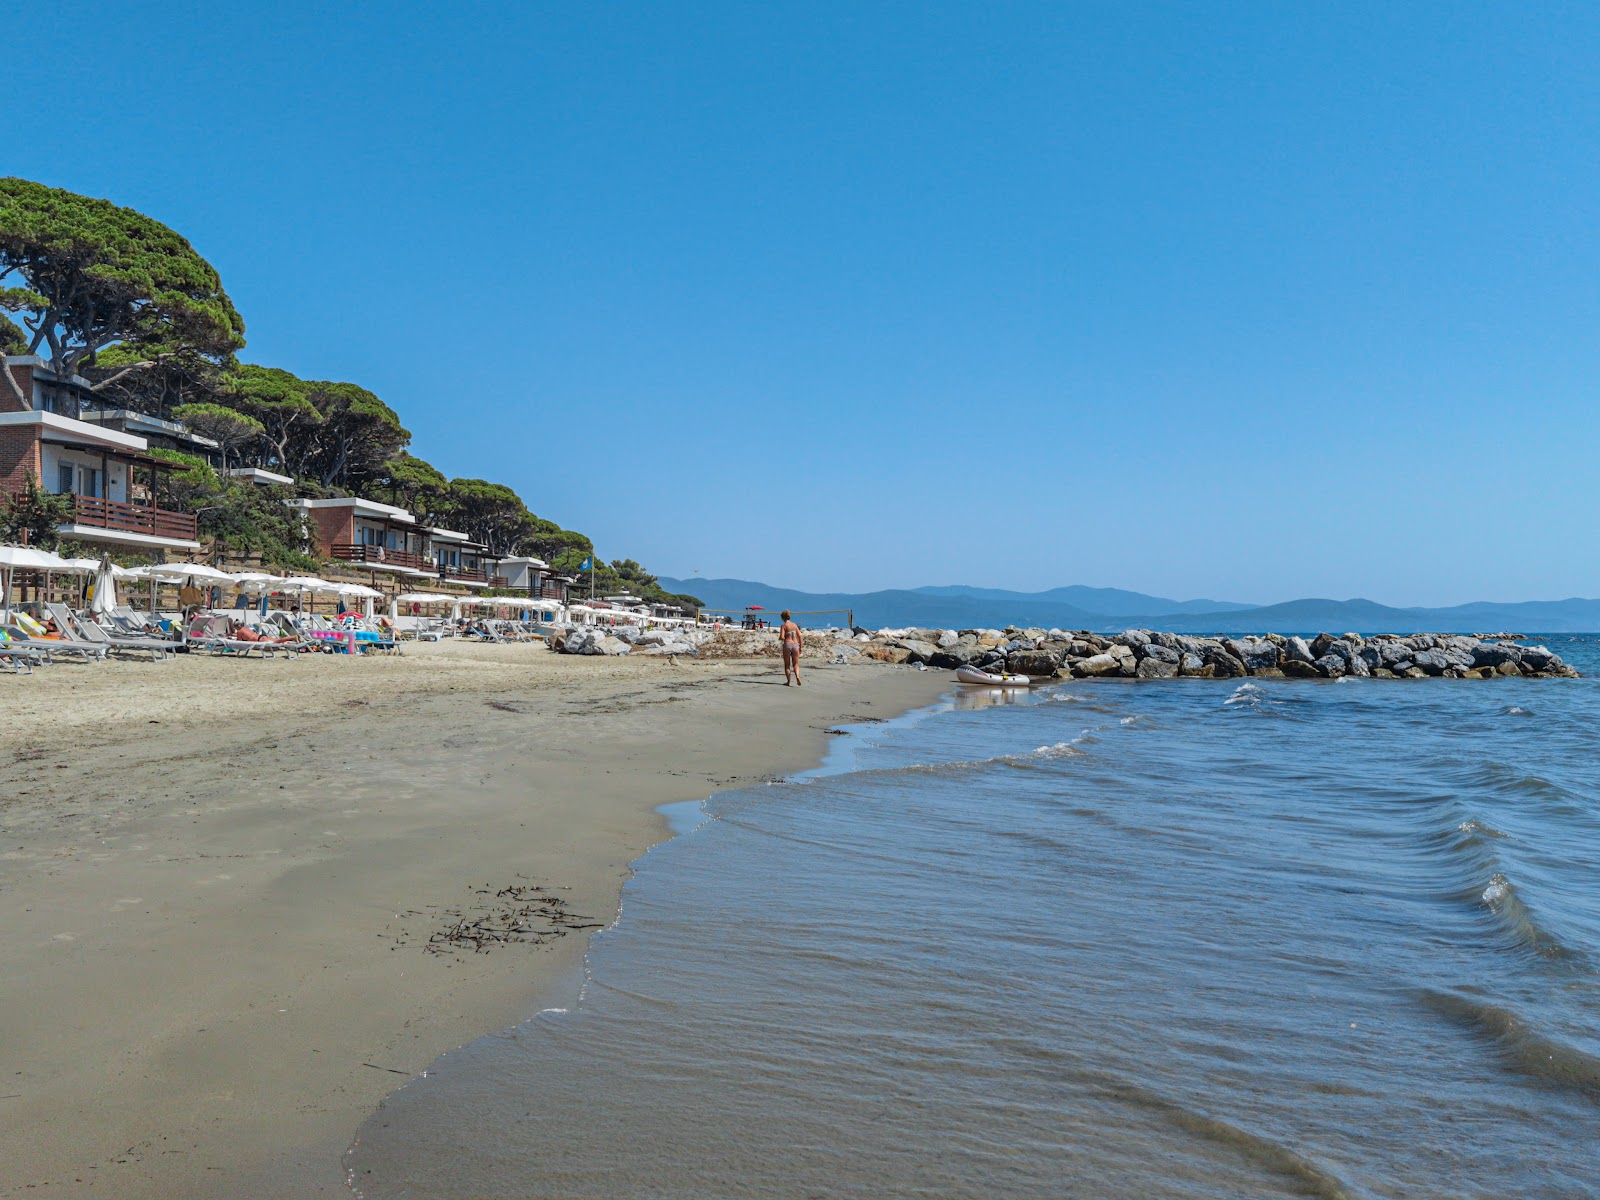 Foto van Spiaggia Golfo del Sole met hoog niveau van netheid